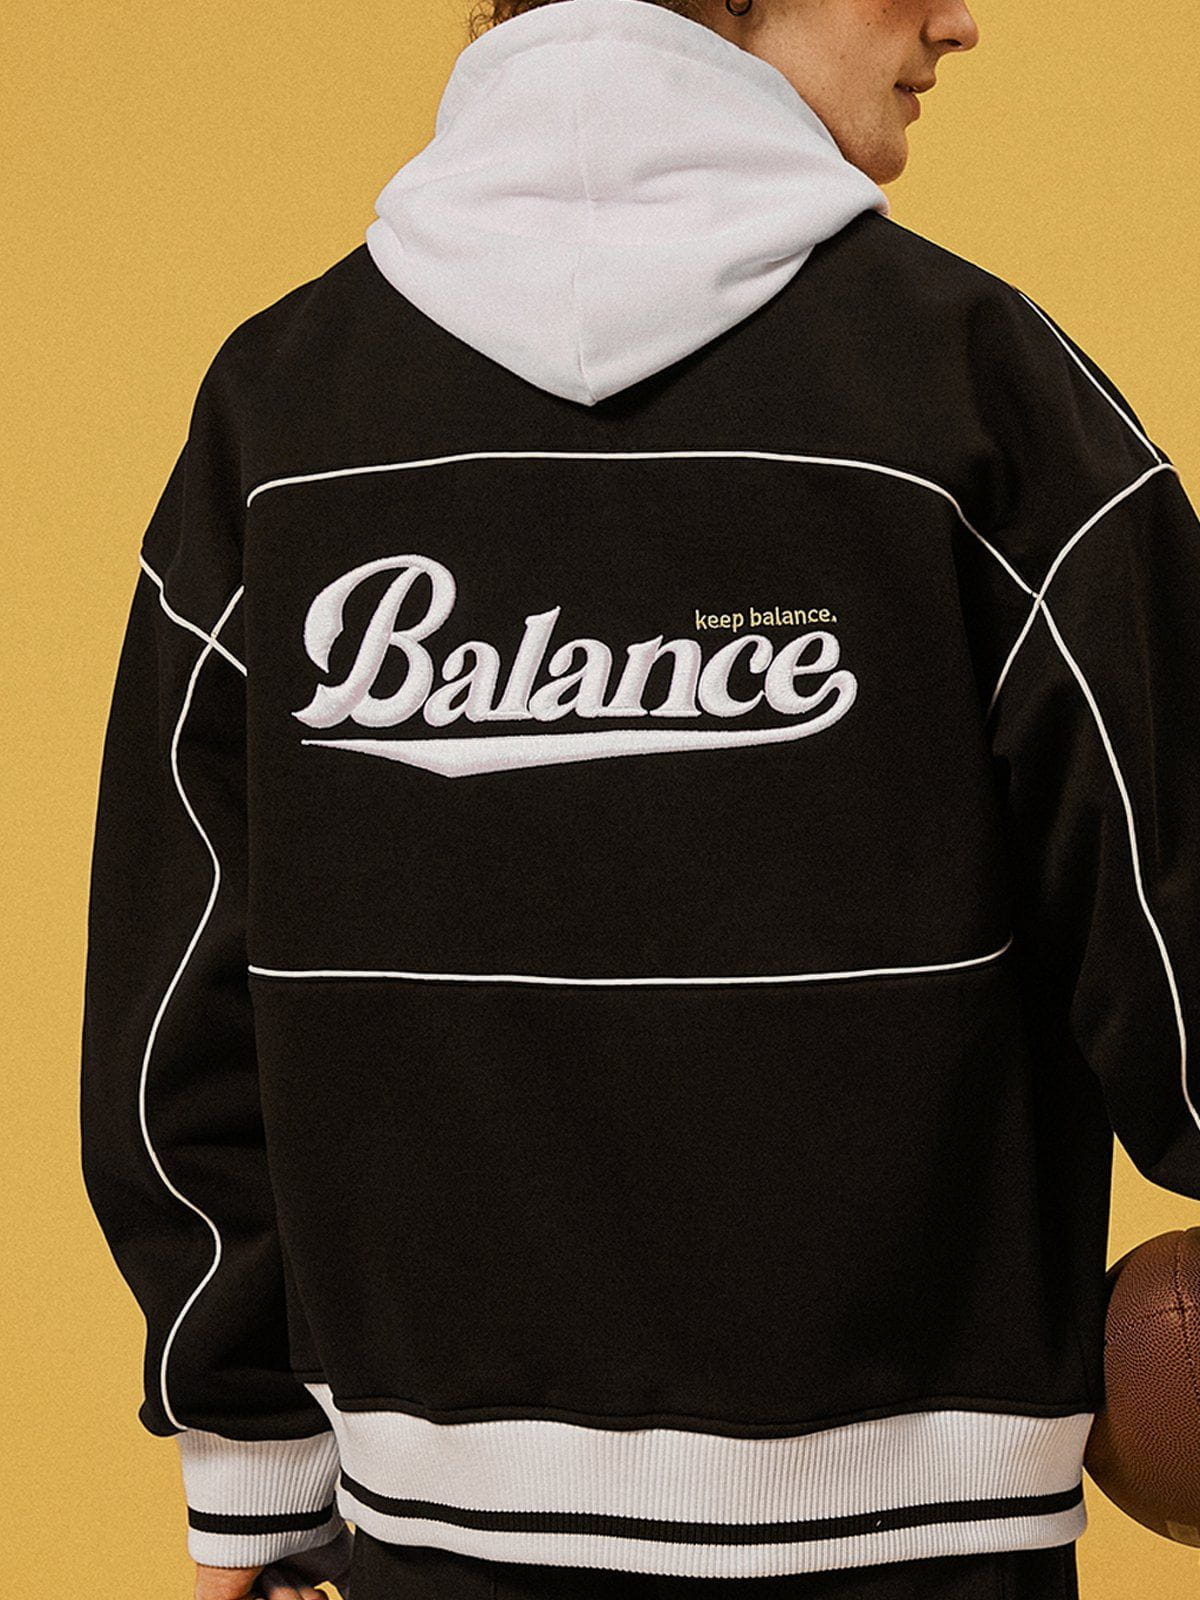 Faire Echo "Balance" Reflective Line Varsity Jacket